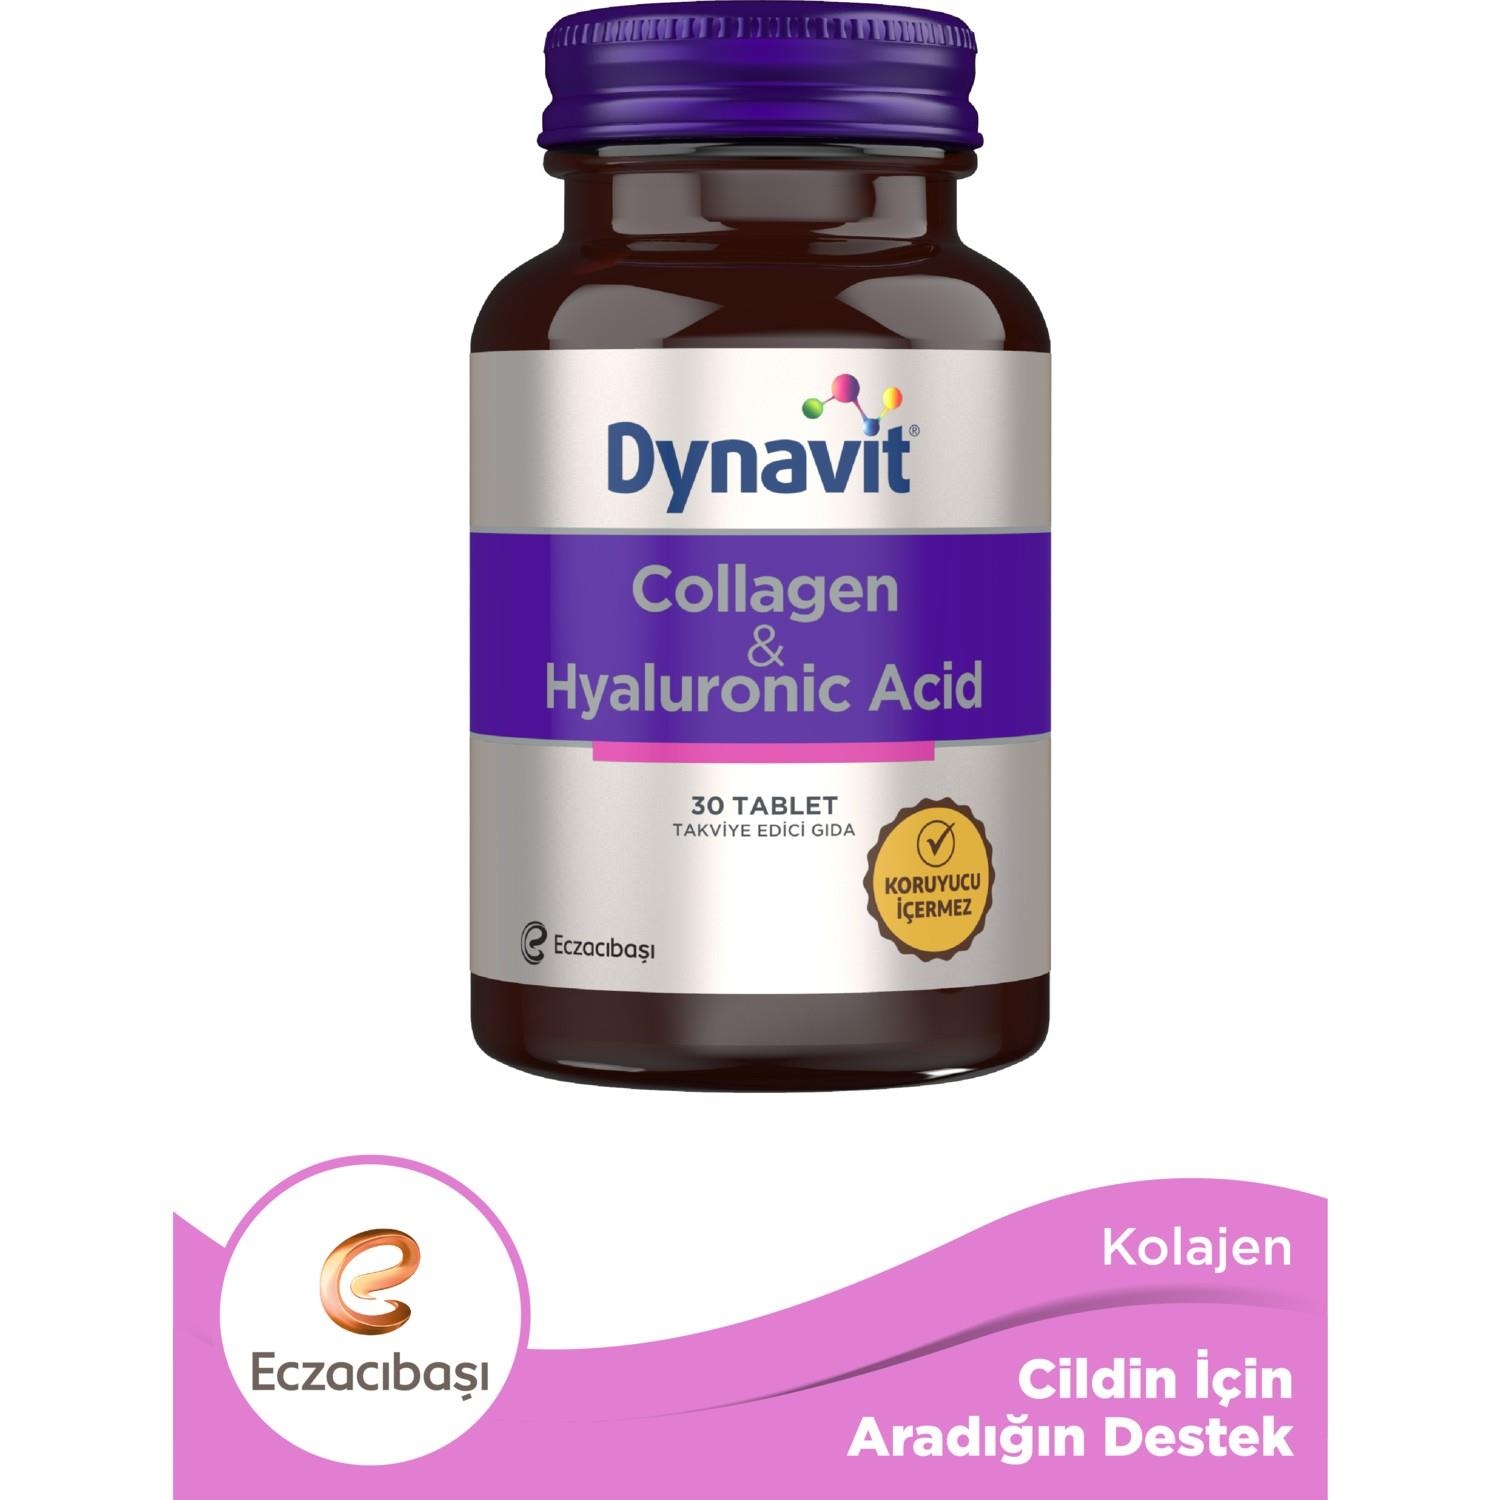 Dynavit Collagen Hyaluronic Acid 30 Tablet - 2